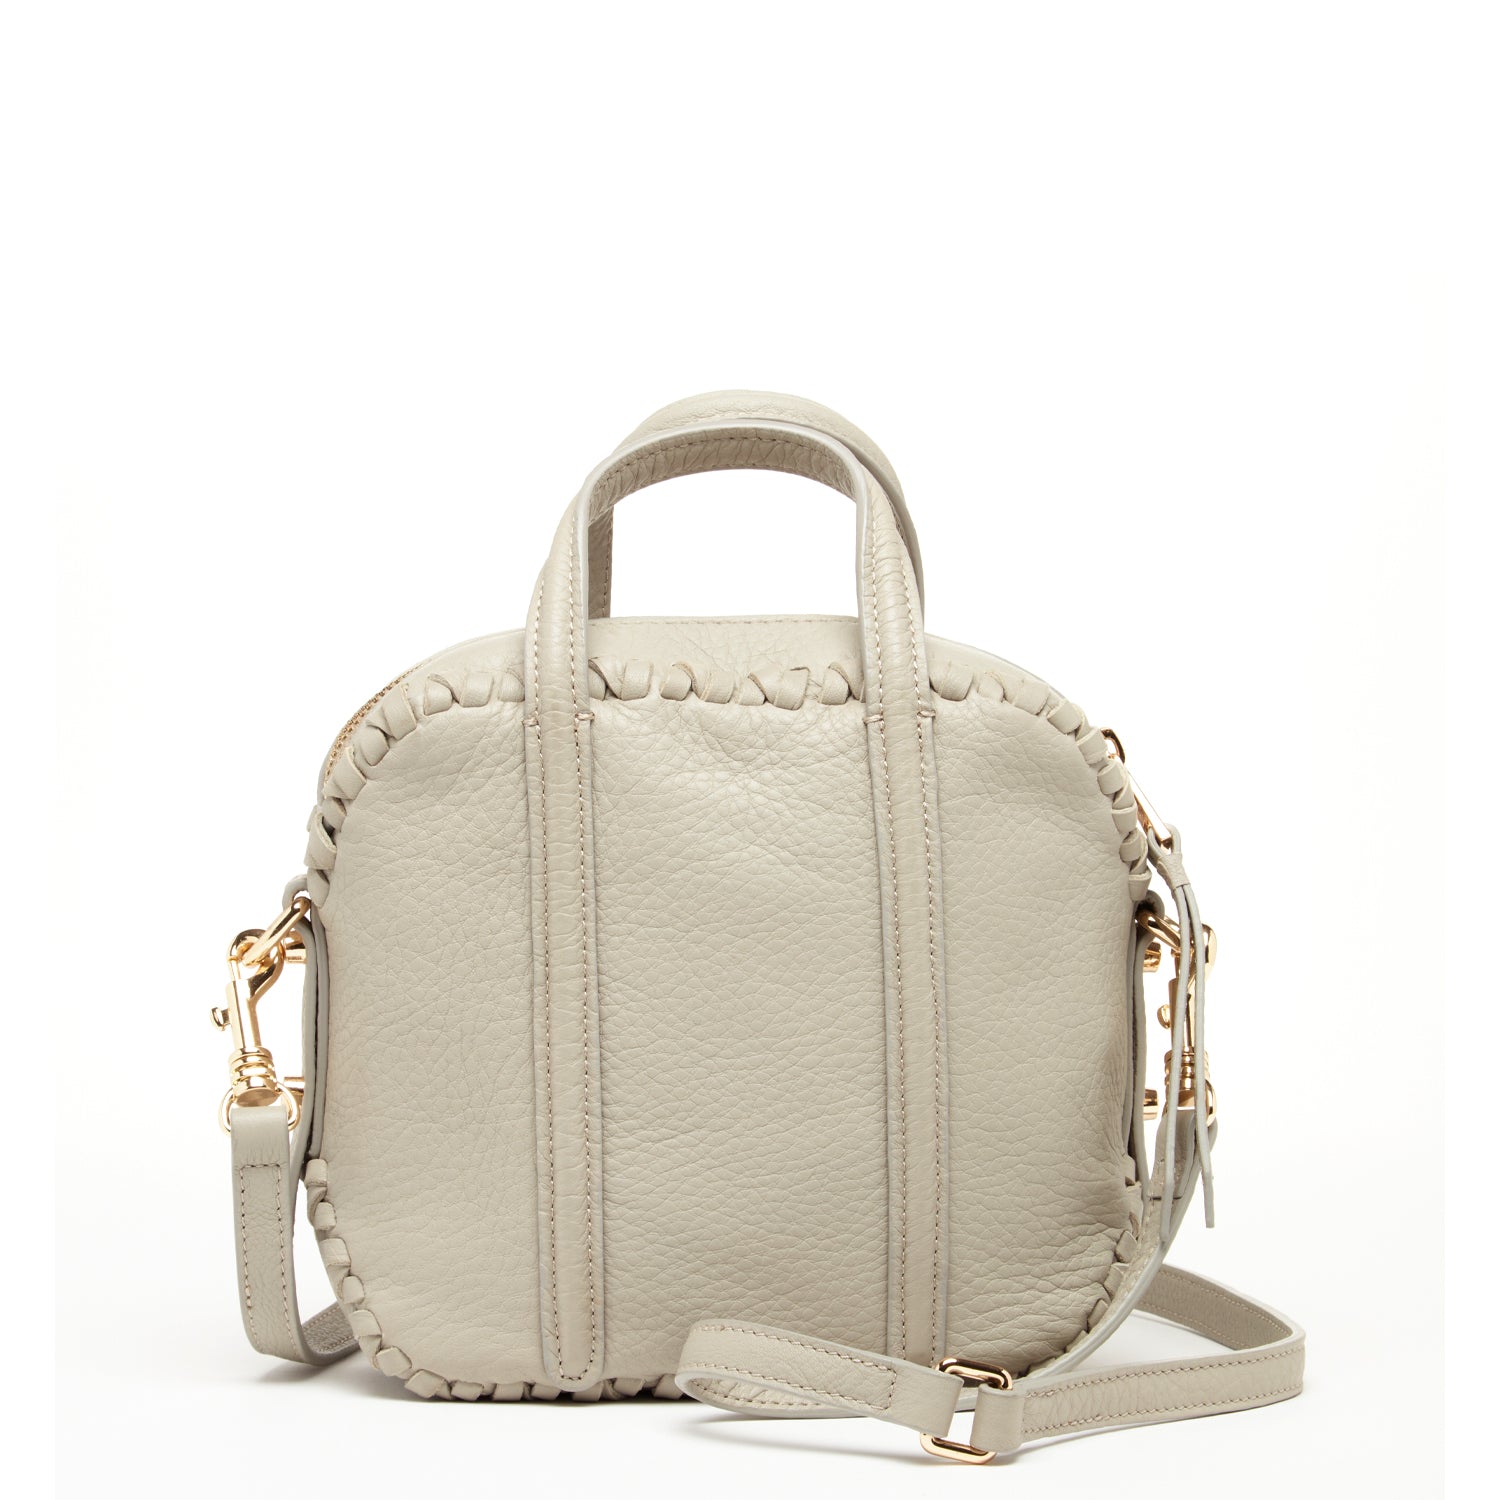 Elegant and versatile Evelyn gray leather crossbody bag